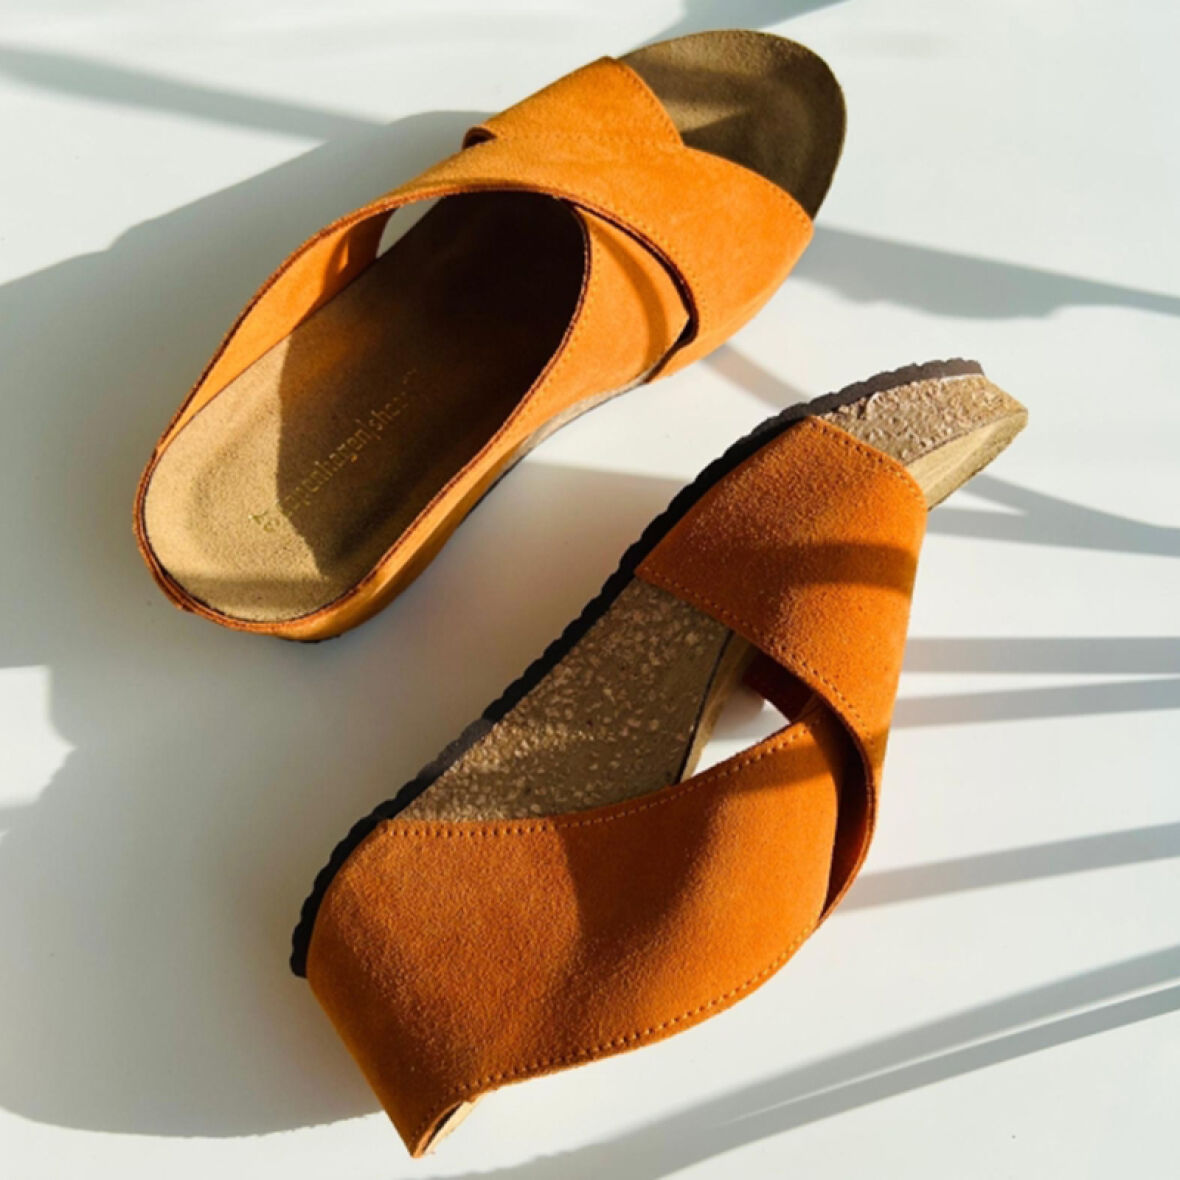 Føde nåde Sved Copenhagen Shoes - Frances Sandal cs7495 orange - jydepotten.dk